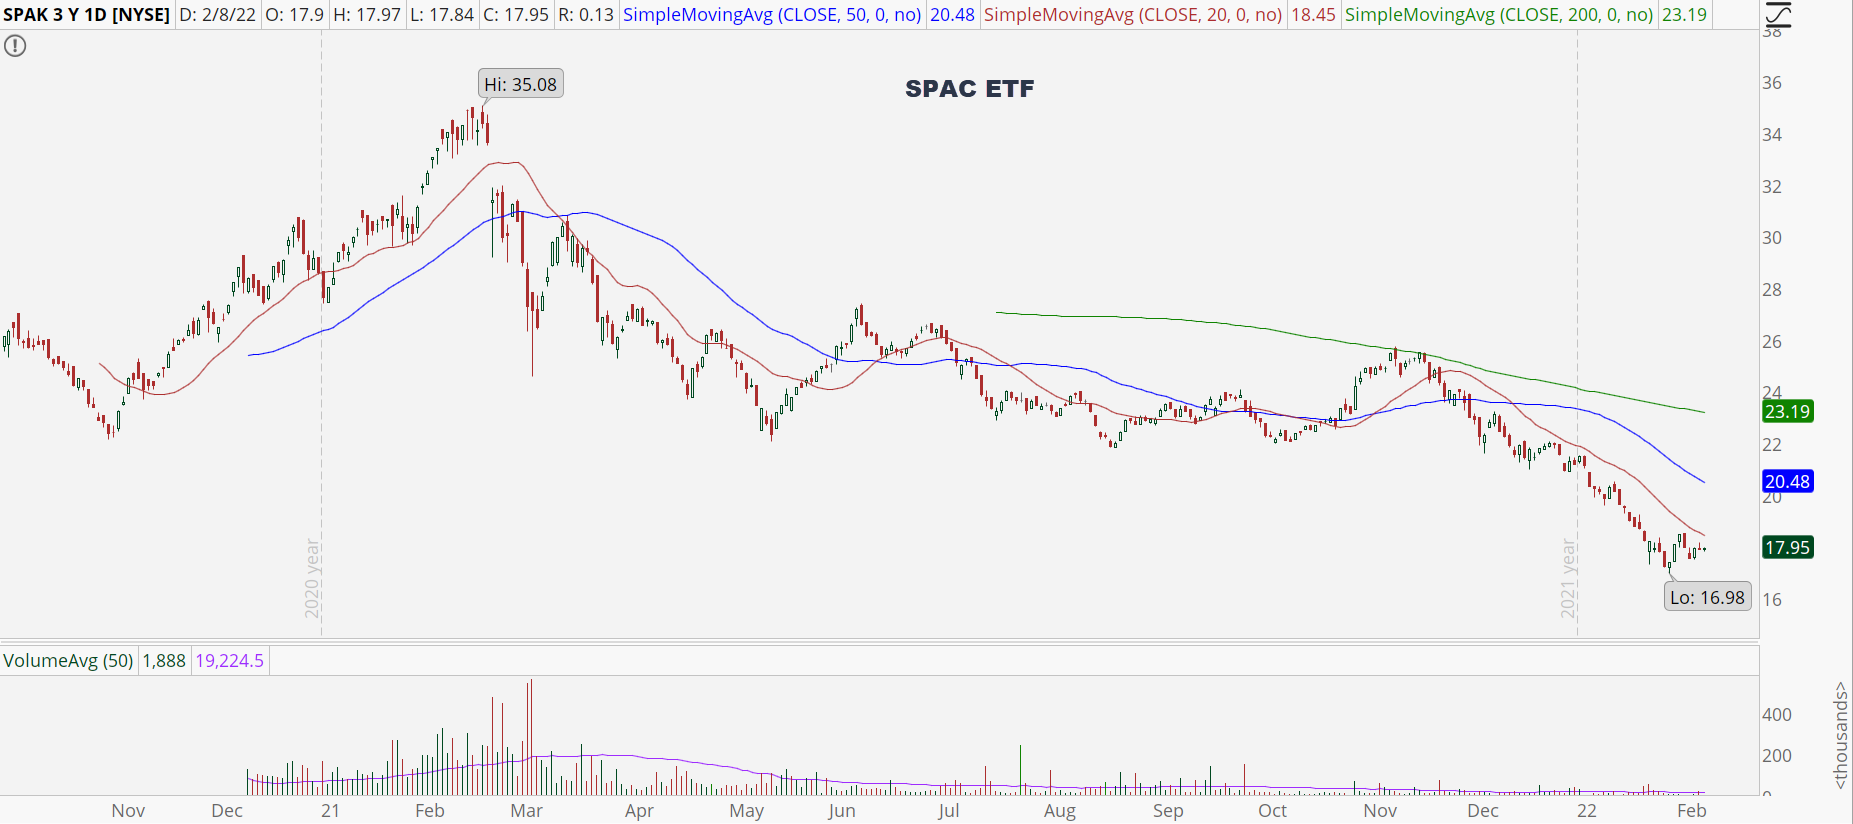 Defiance Next Gen SPAC Derived ETF (SPAK) chart with nasty downtrend.